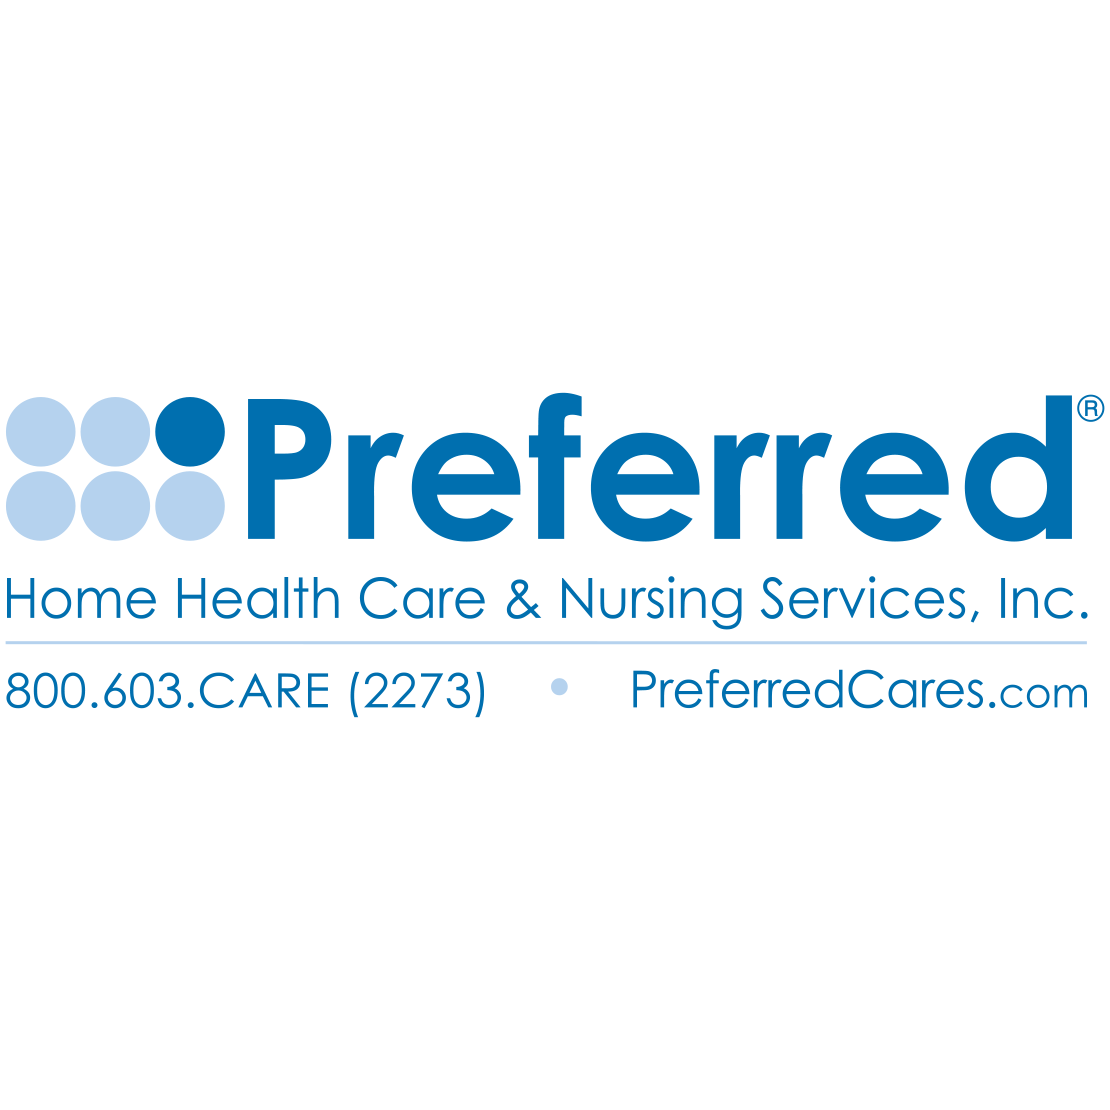 Preferred Home Health Care & Nursing Services, Inc